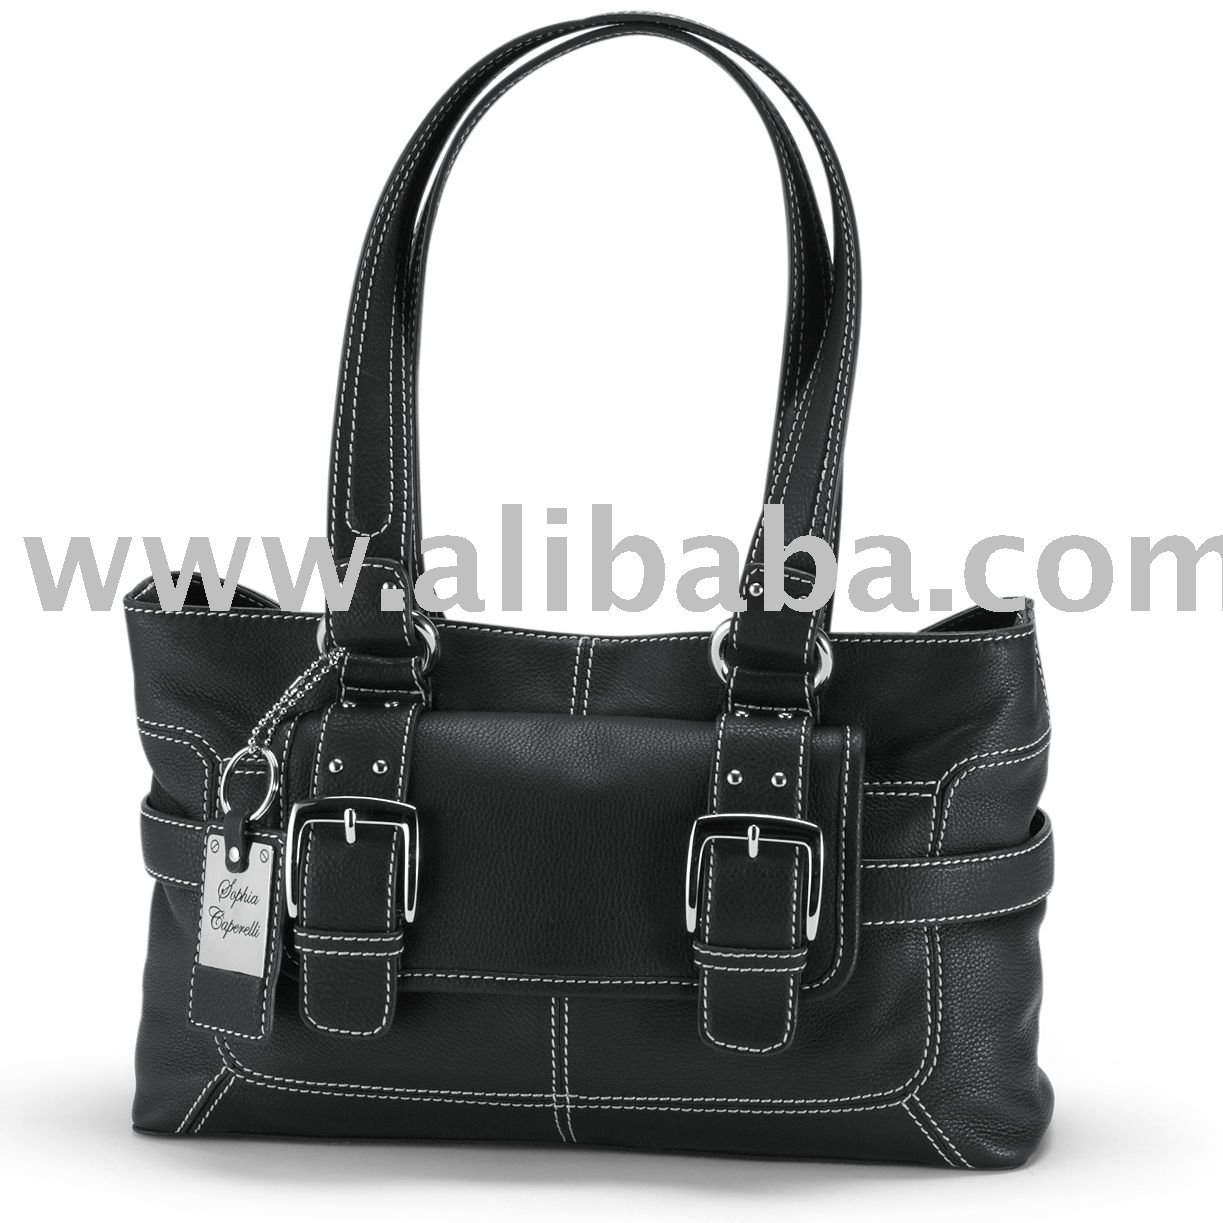 Ladies'Handbags Sales, Buy Ladies'Handbags Products from alibaba.com